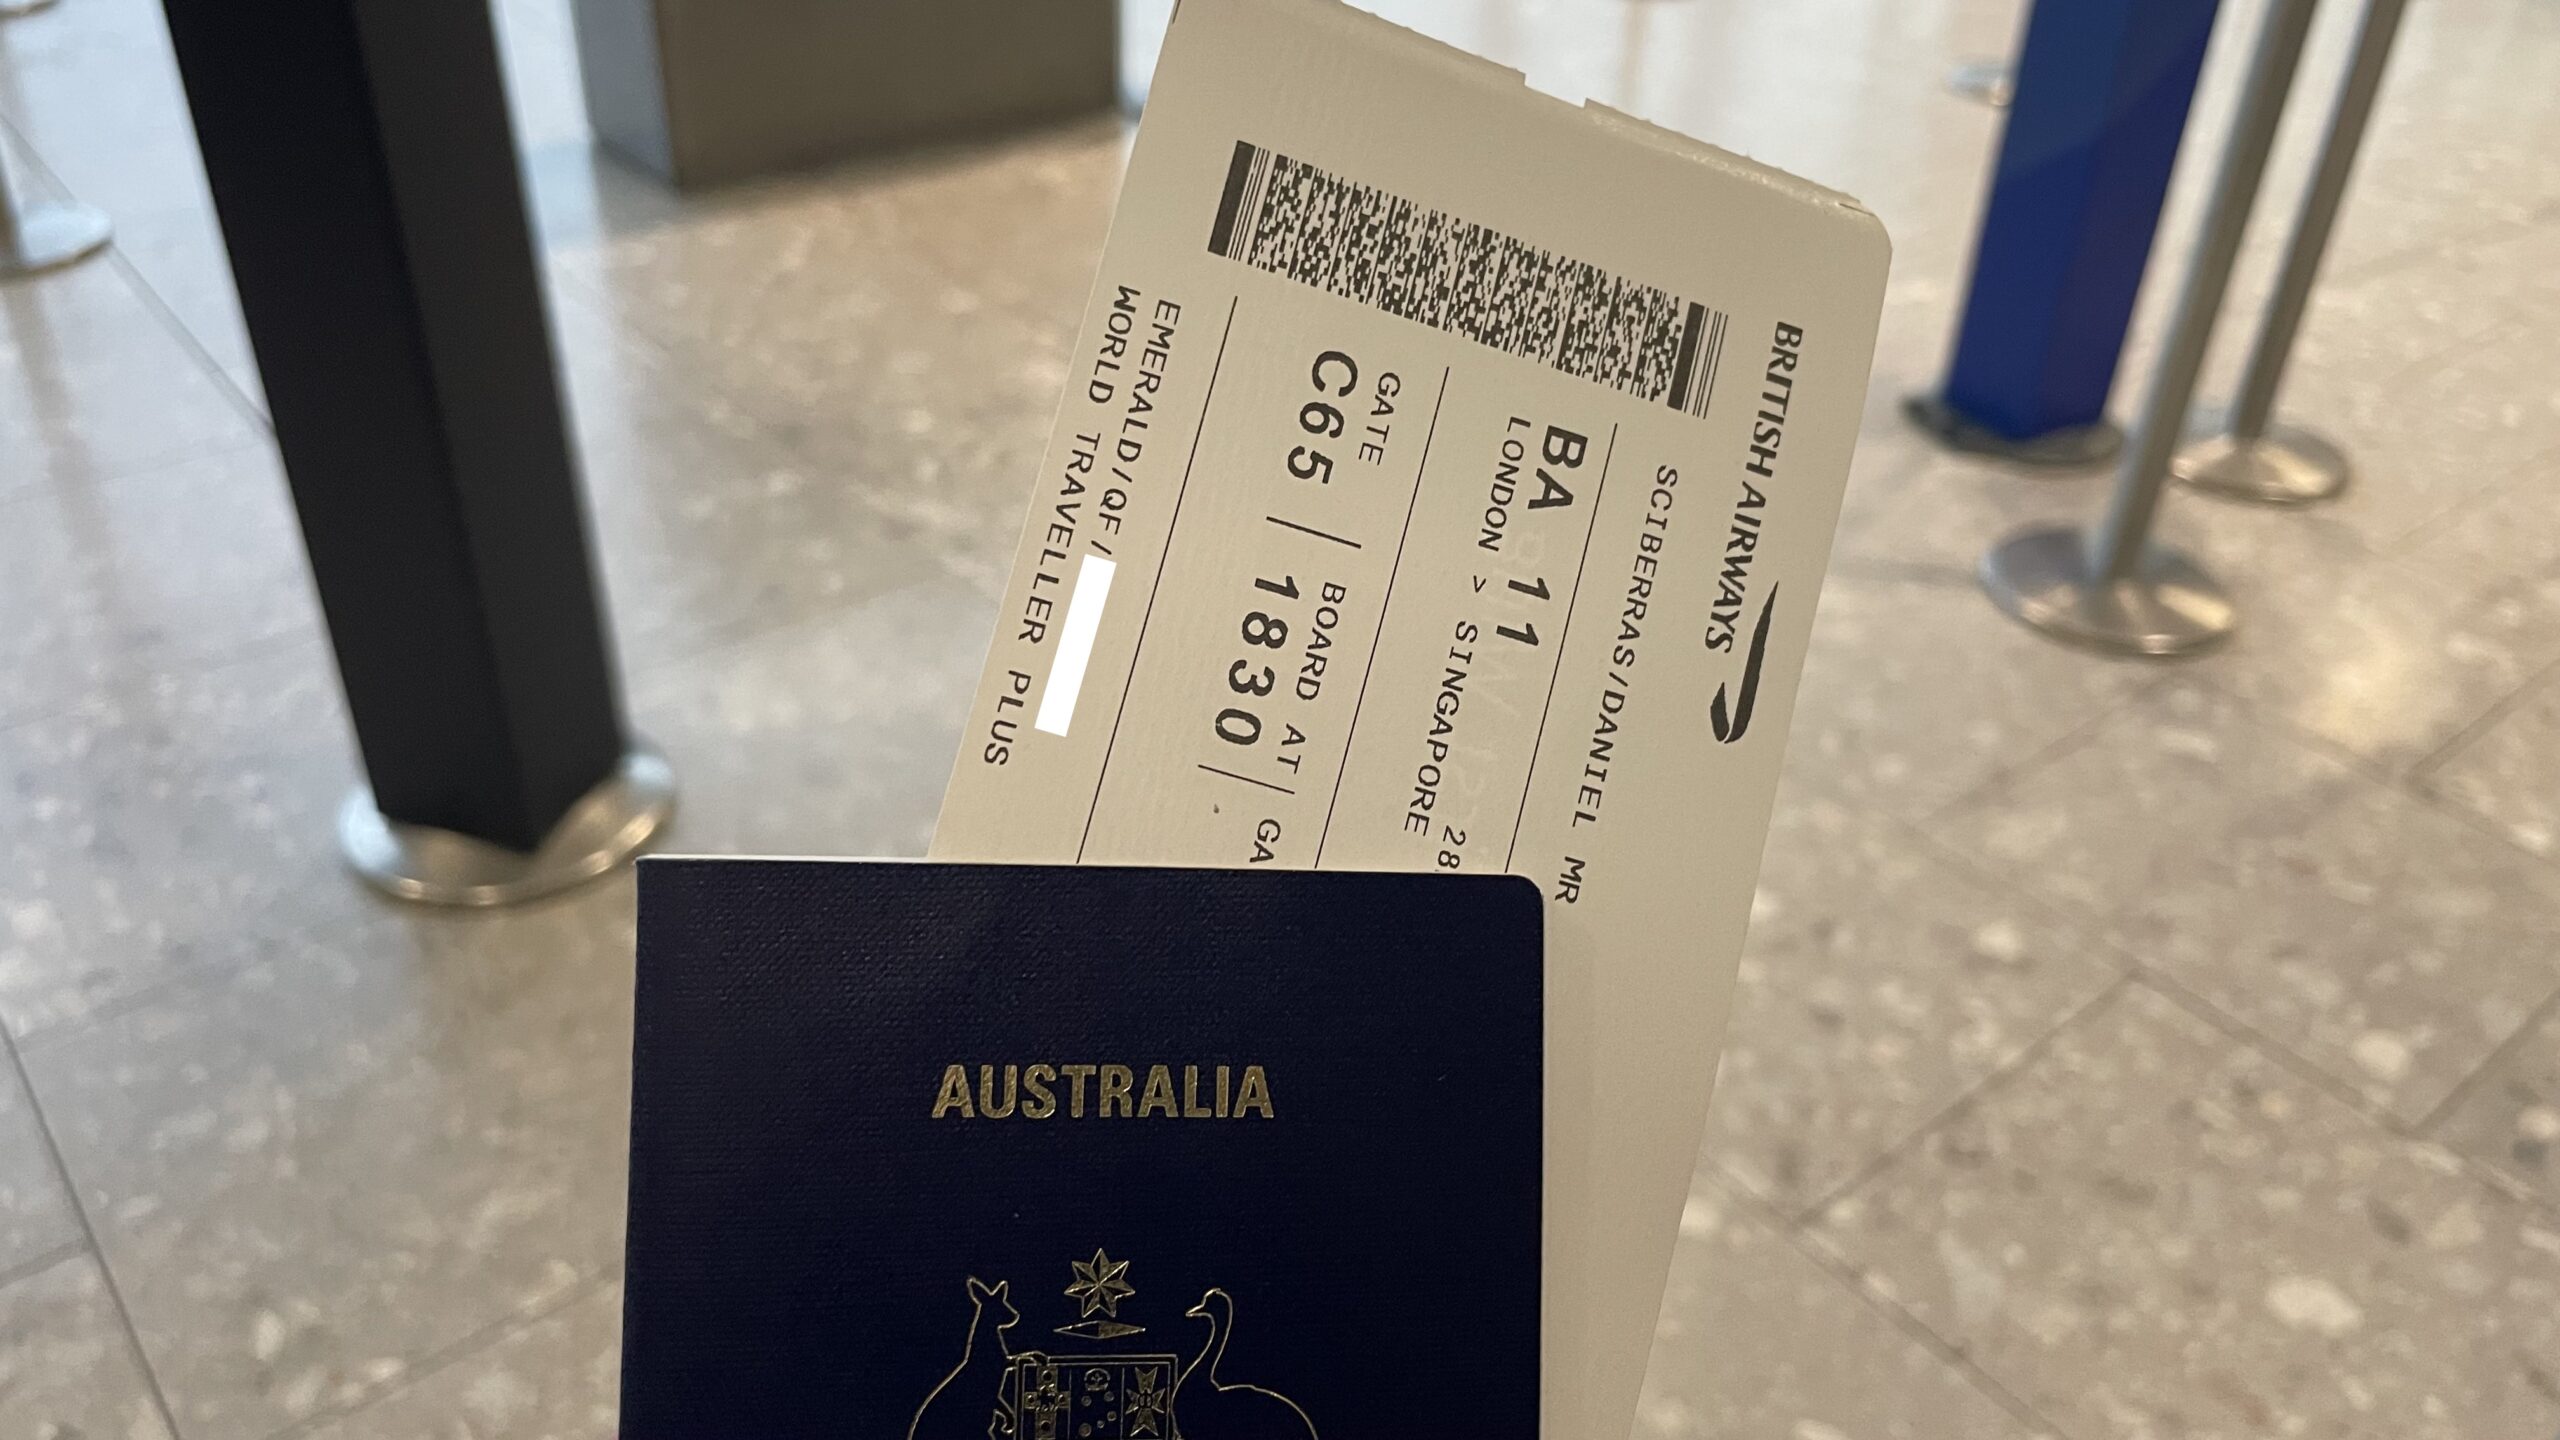 British Airways Boarding Pass in Passport